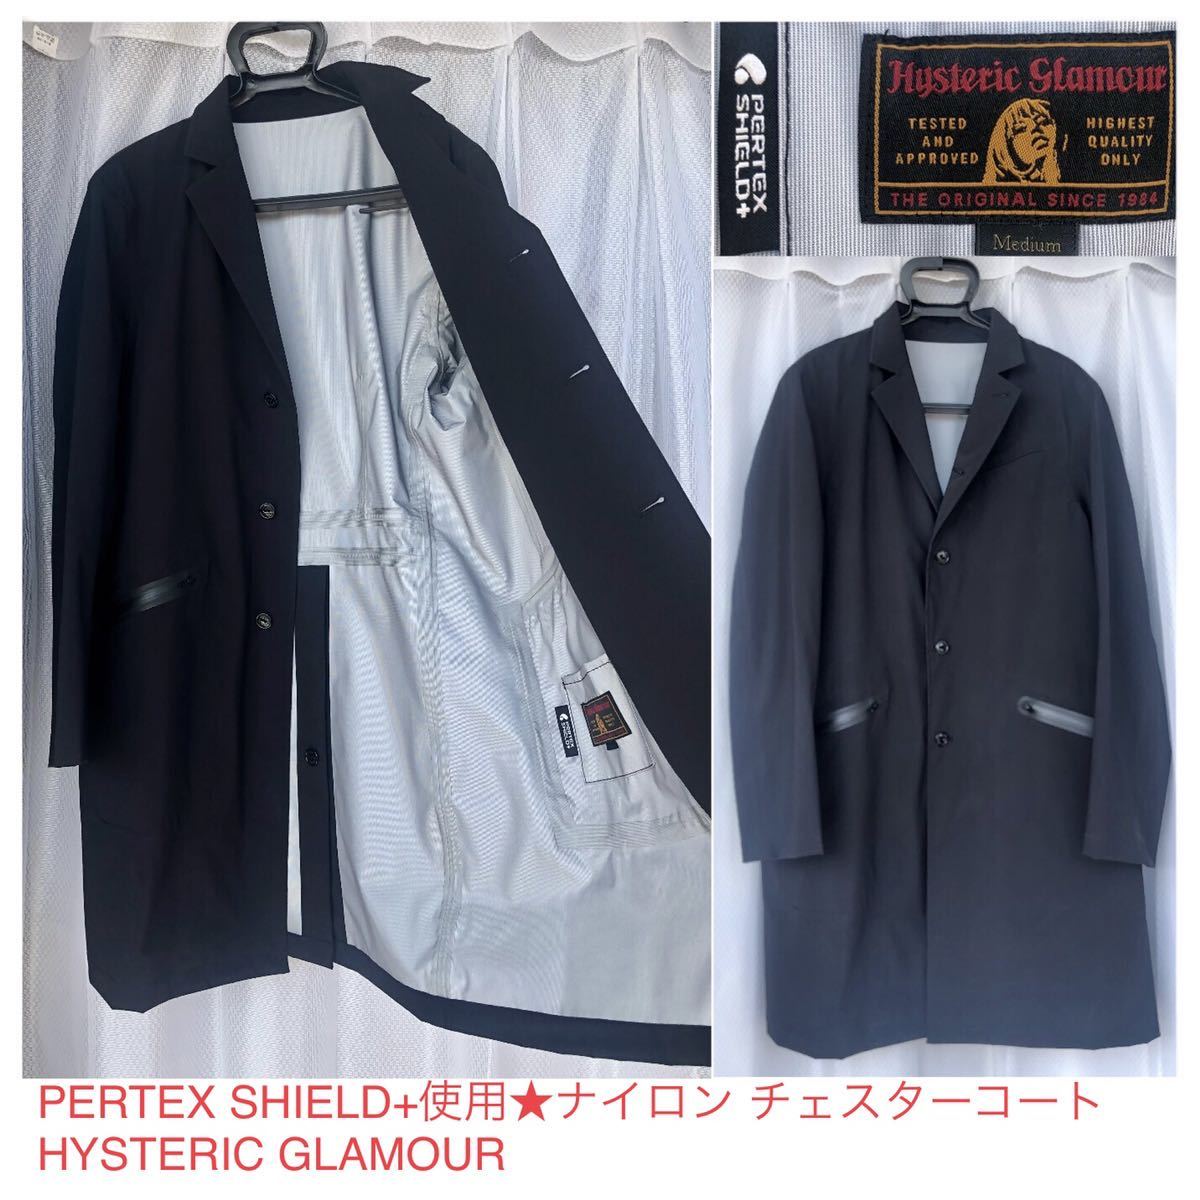 PERTEX SHIELD+使用 HYSTERIC GLAMOUR / ナイロン チェスターコート M